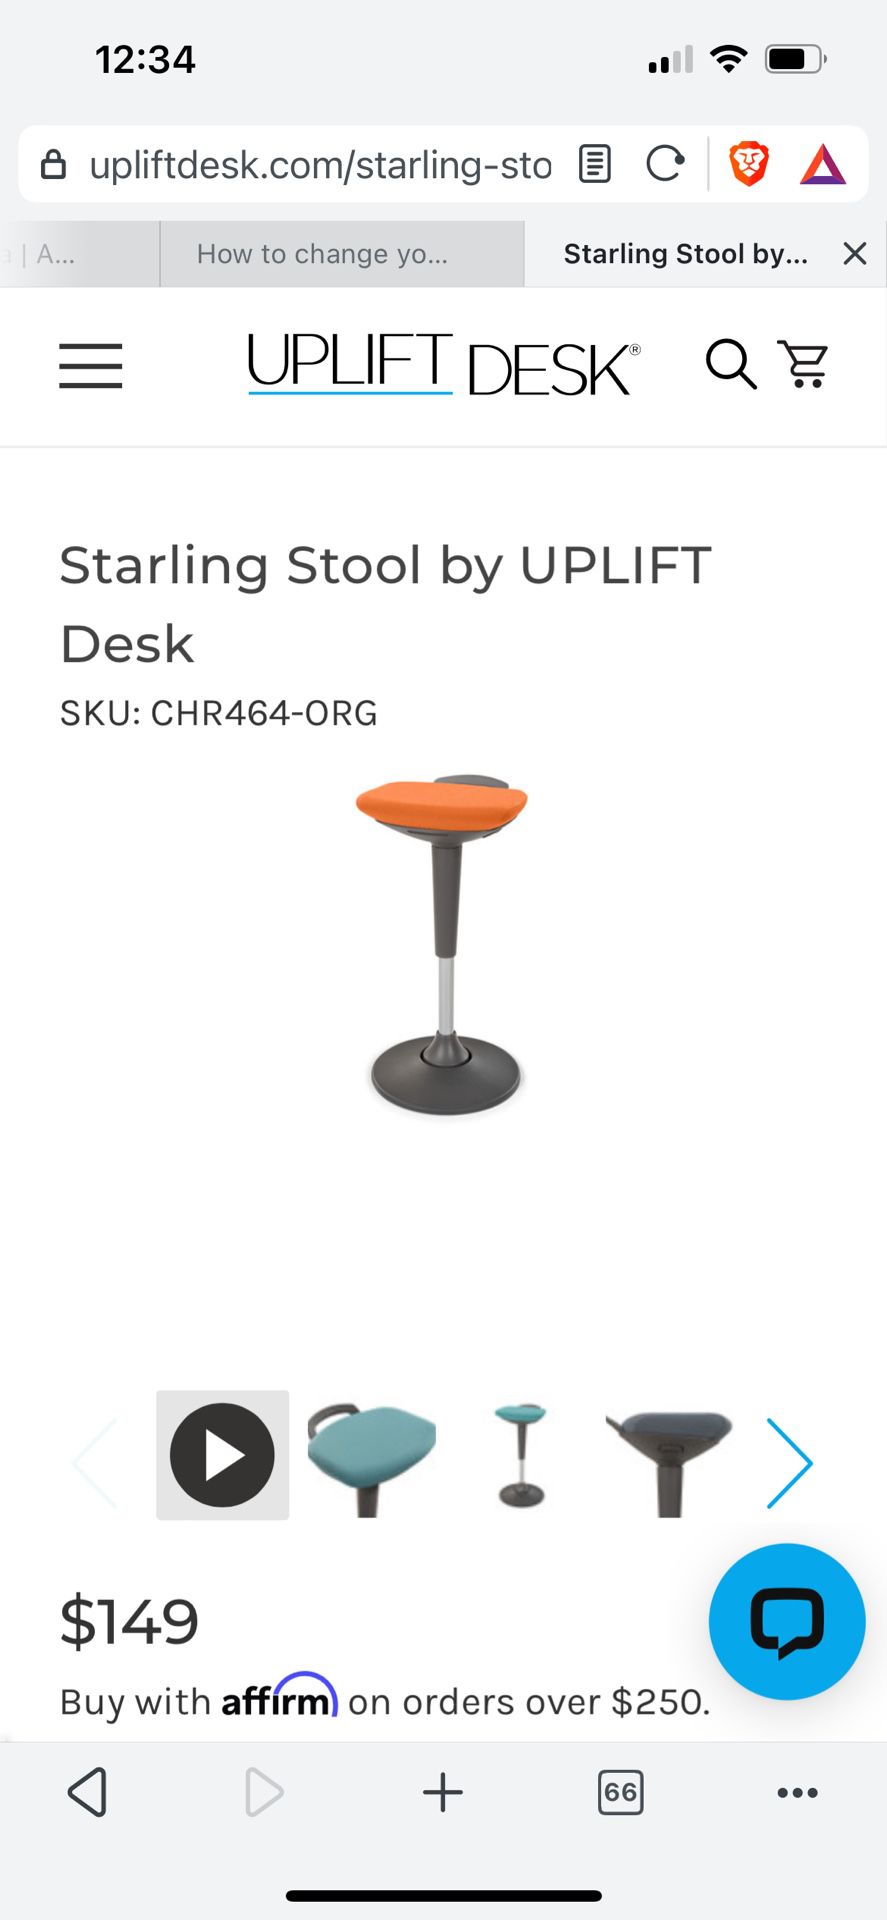 Standing Desk Stool Uplift Desk Starling Stool